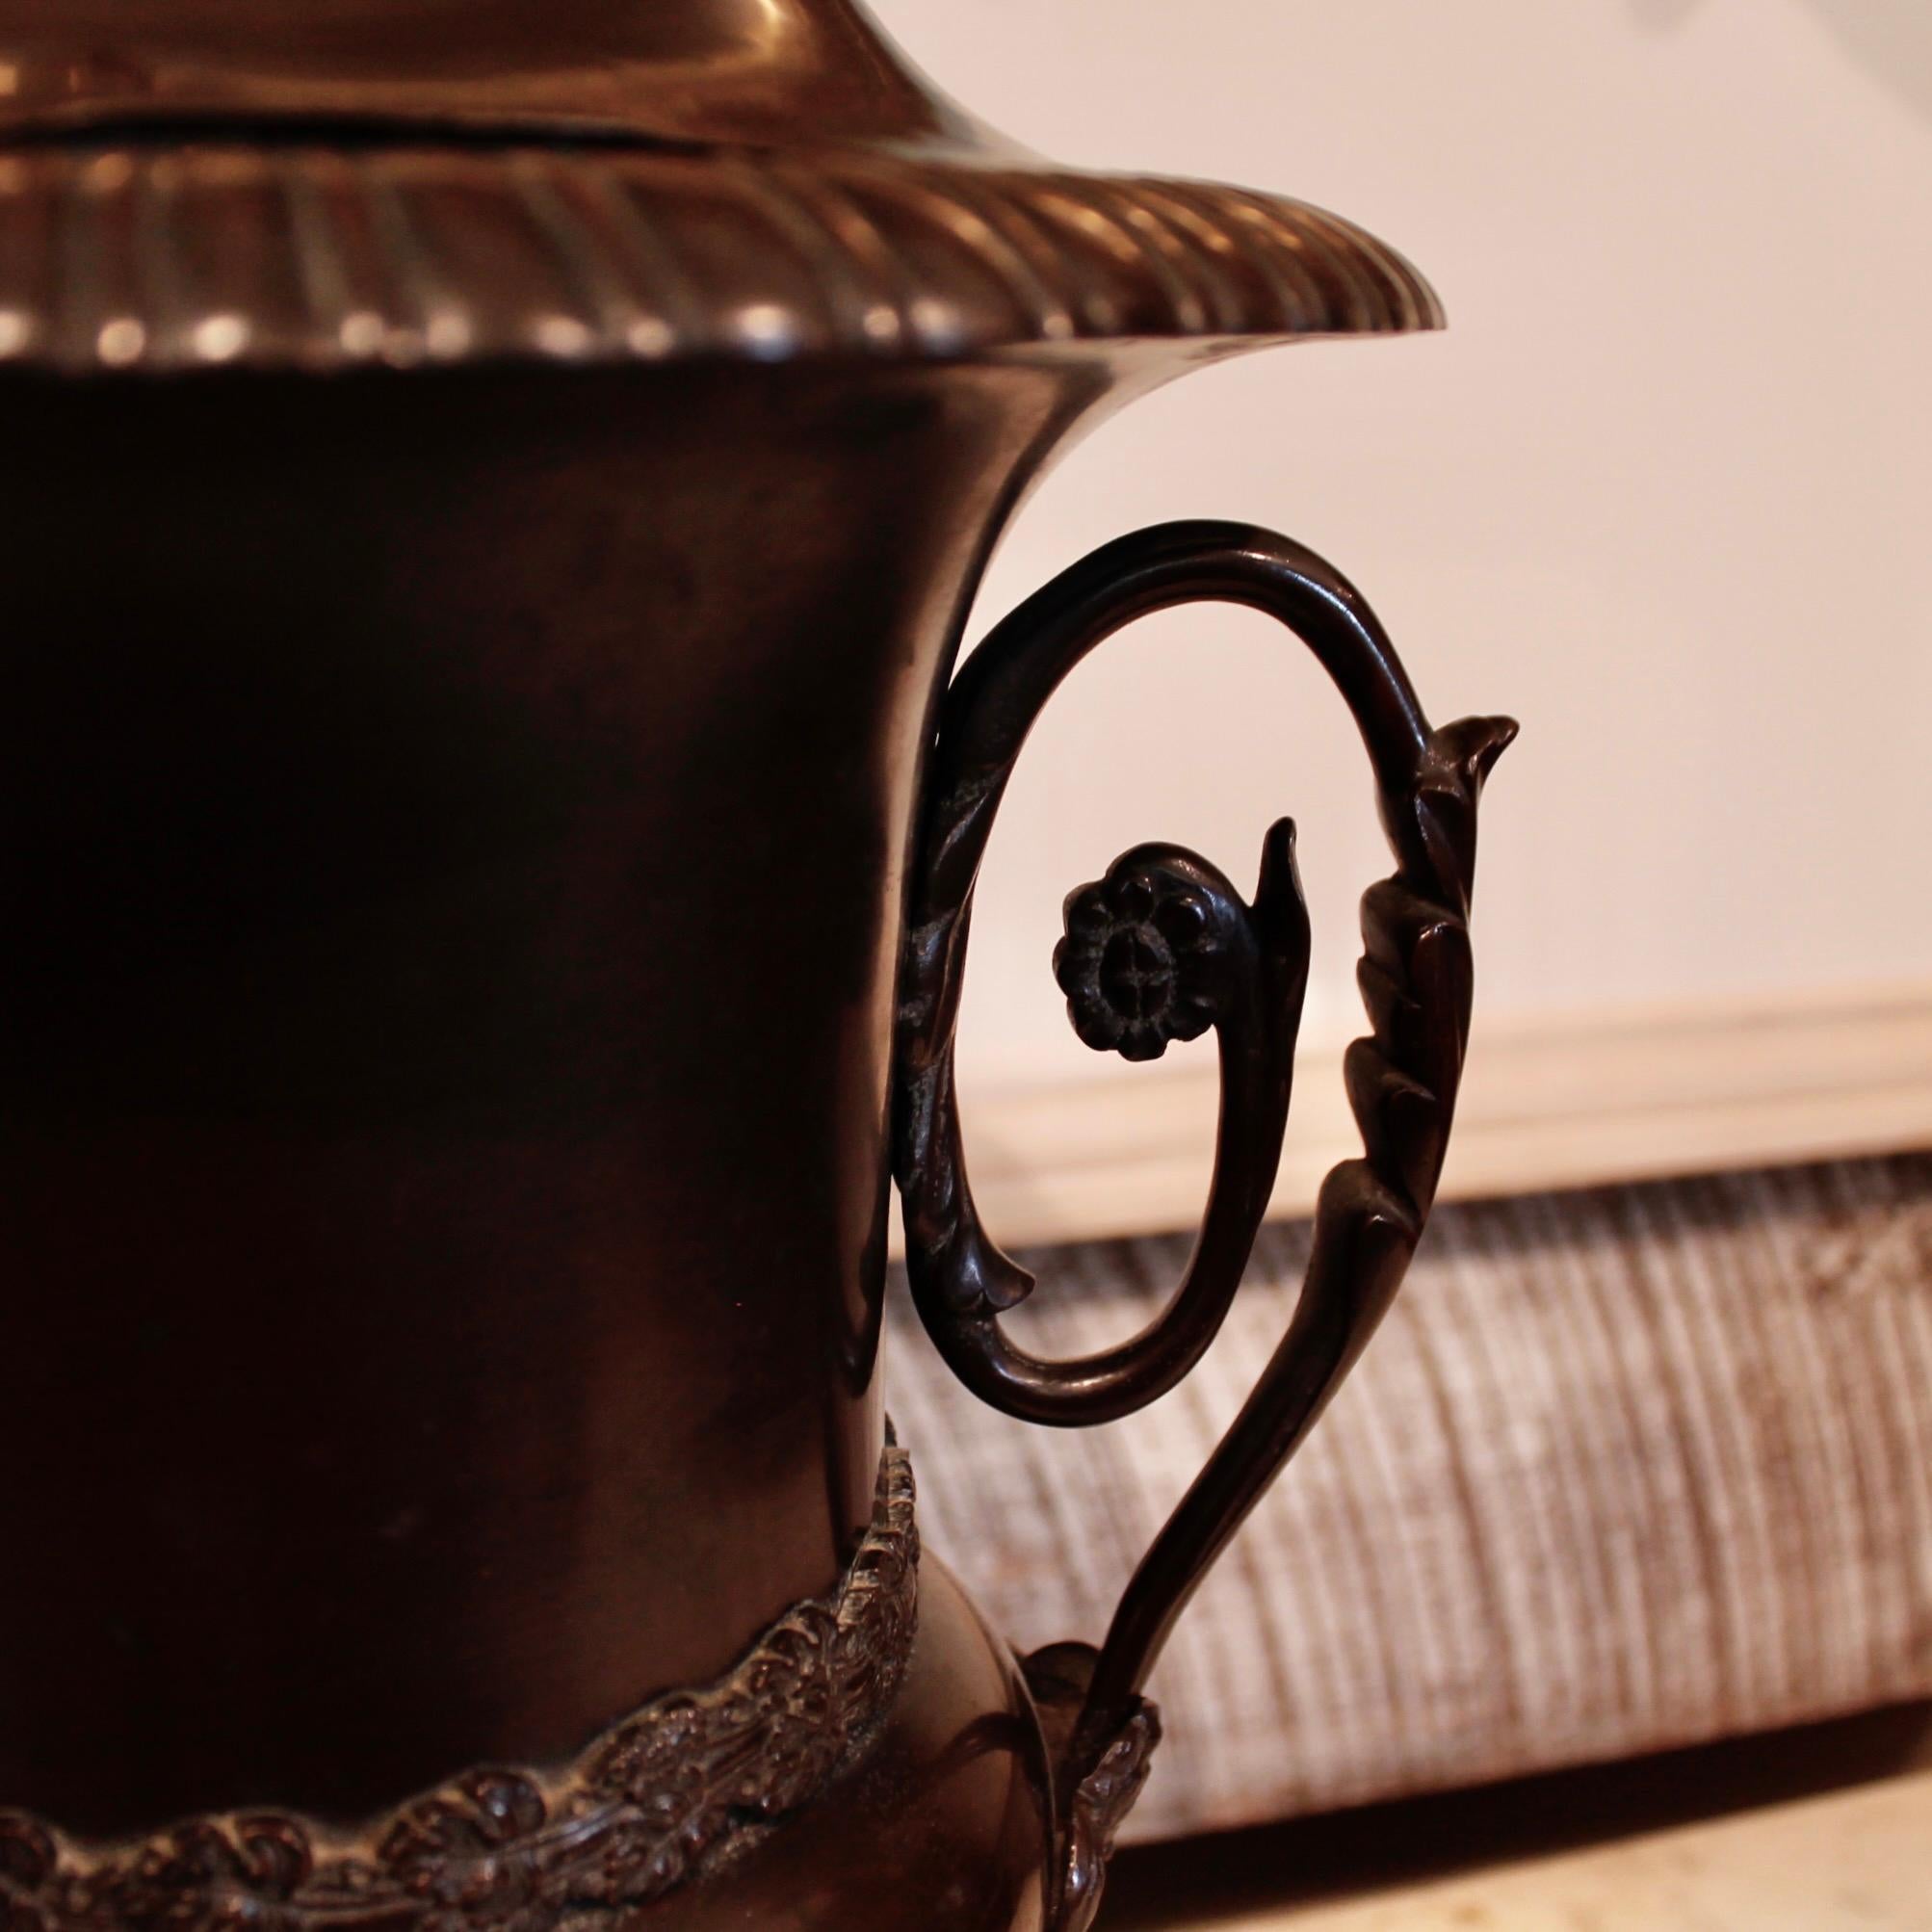 English Antique Regency Period Copper Hot Water Urn (Samovar) For Sale 2